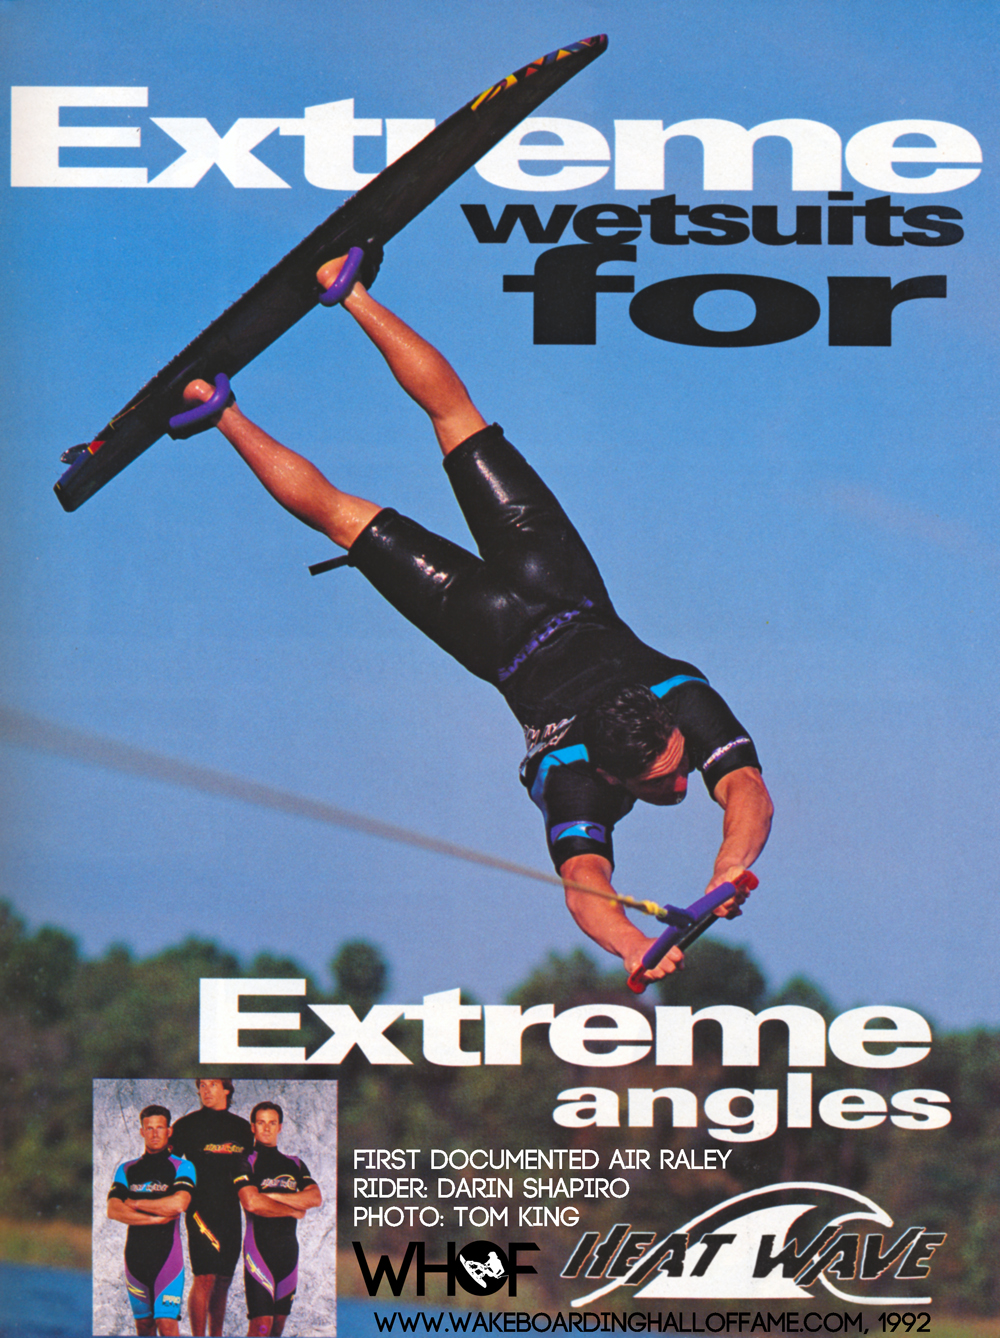 Darin Shapiro 1st Air Raley, Wakeboarding behind boat, 1992